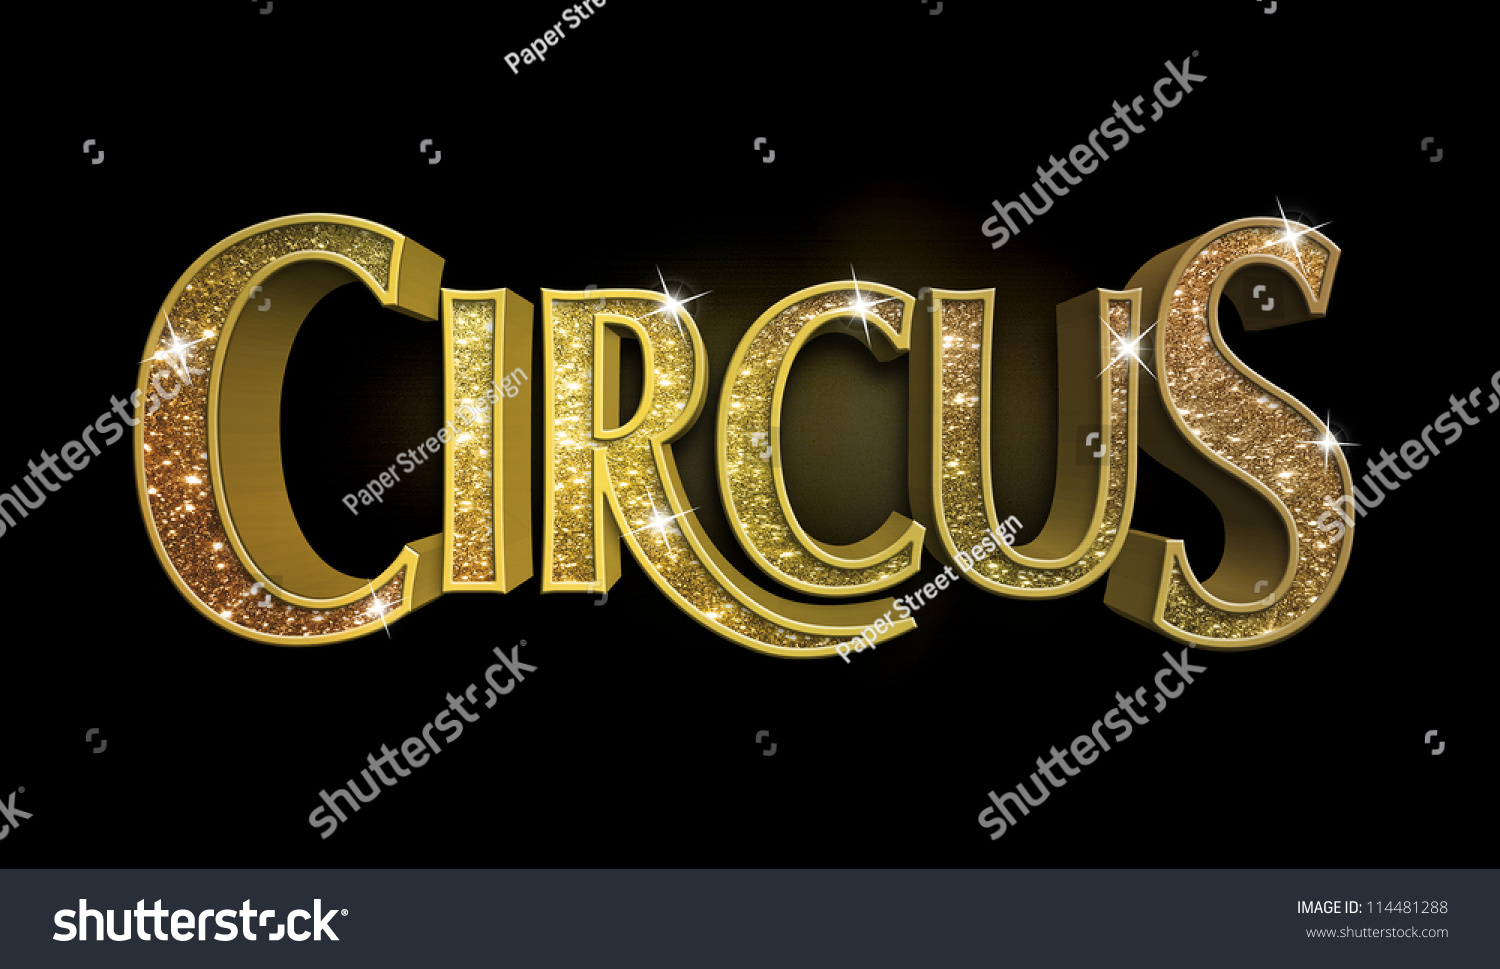 Circus Sign Stock Illustration 114481288 - Shutterstock